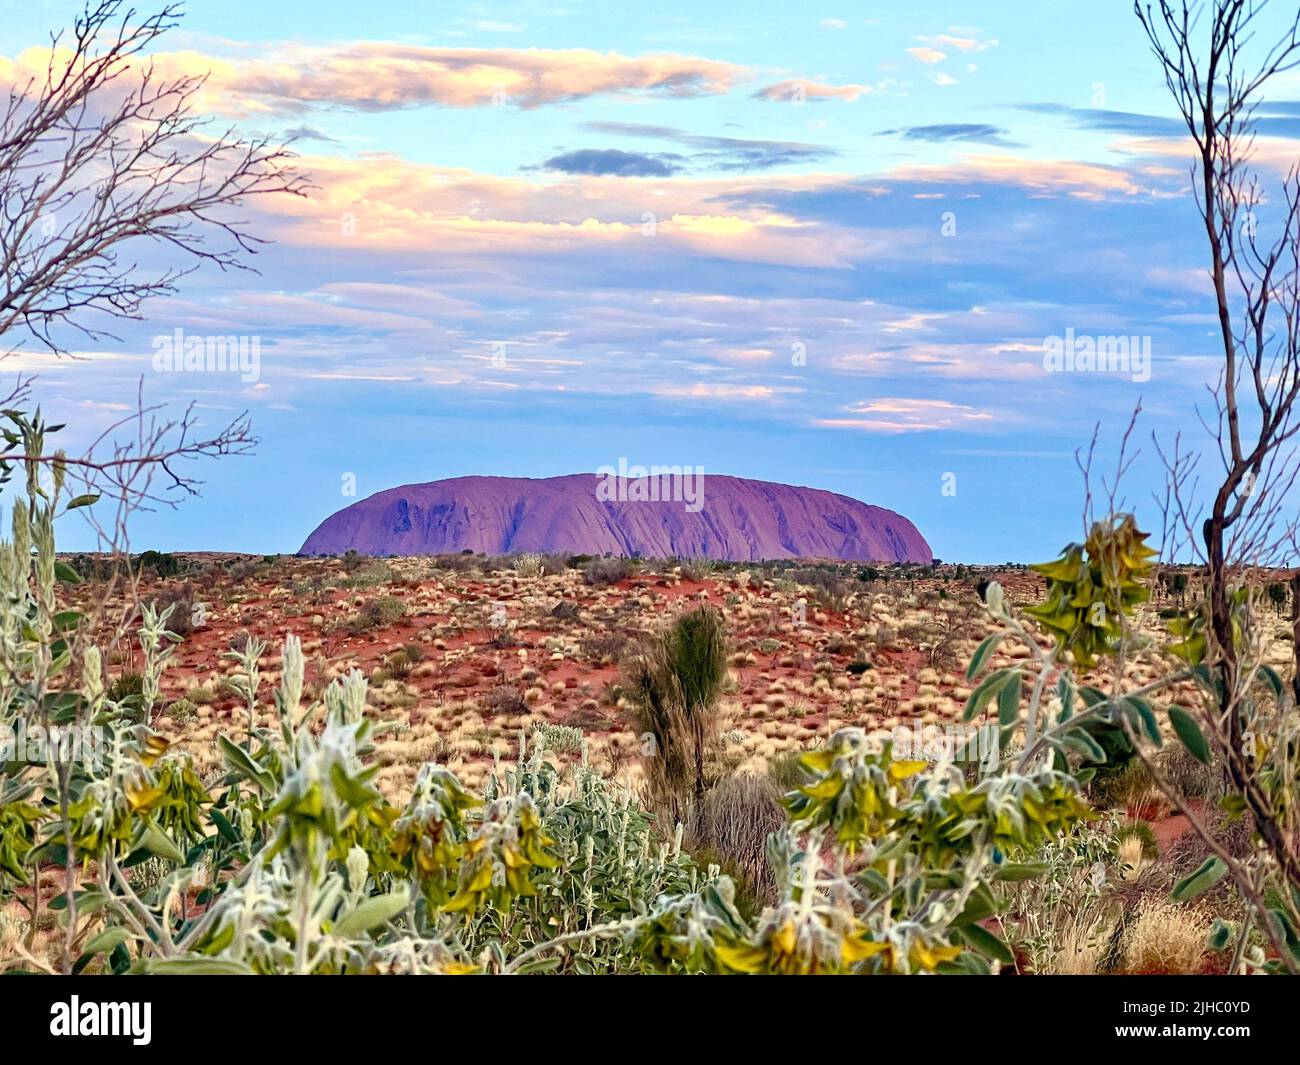 A beautiful shot of Ayers Rock or Urulu sandstone formation in Australia  Stock Photo - Alamy